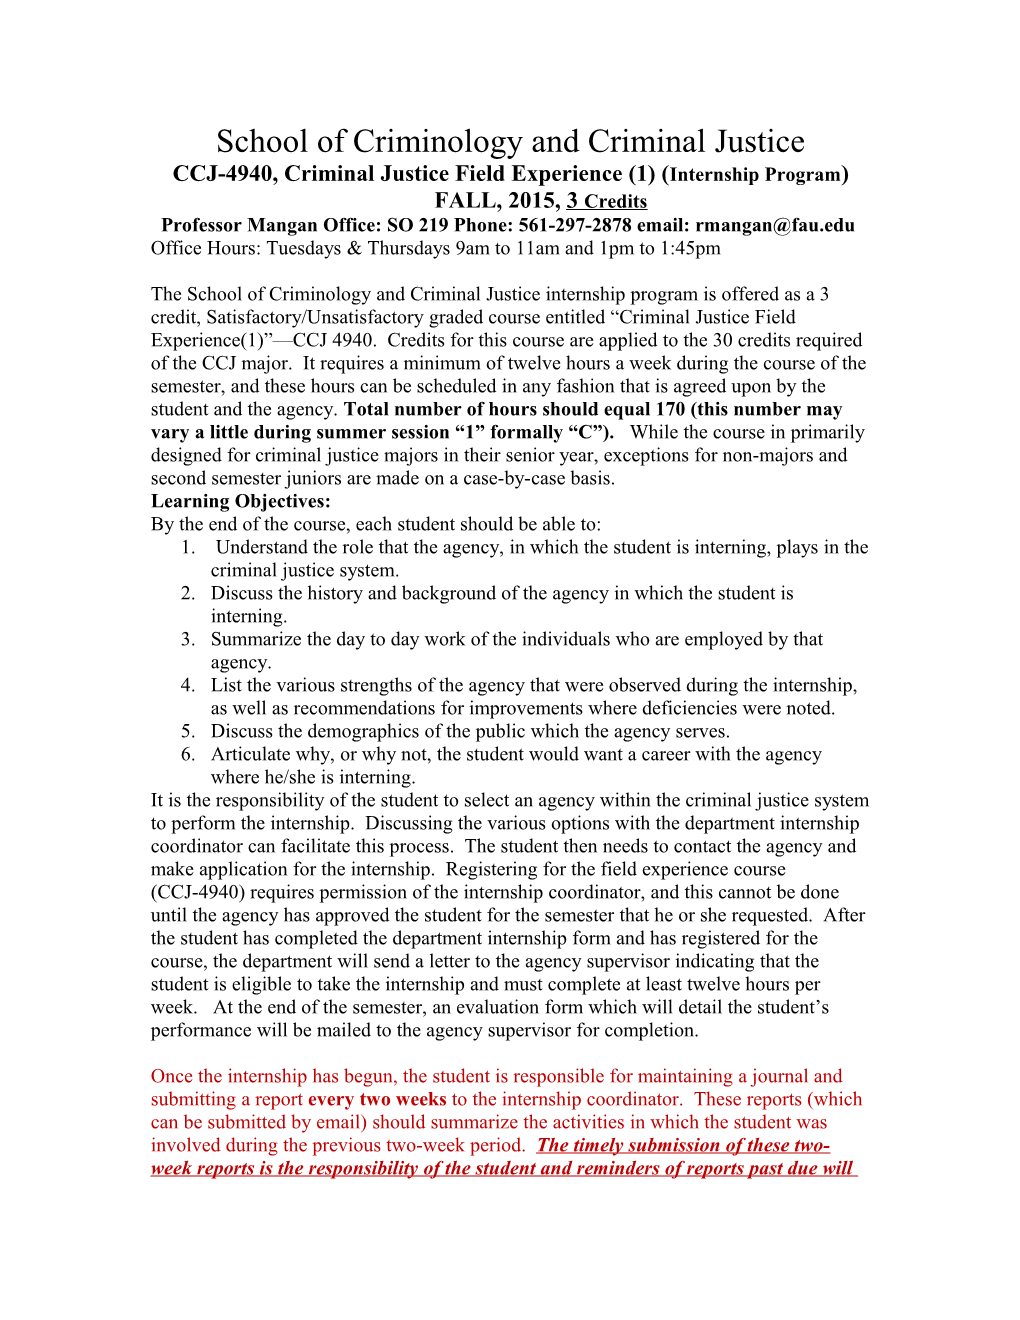 CCJ-4940, Criminal Justice Field Experience (1) (Internship Program)FALL, 2015,3 Credits